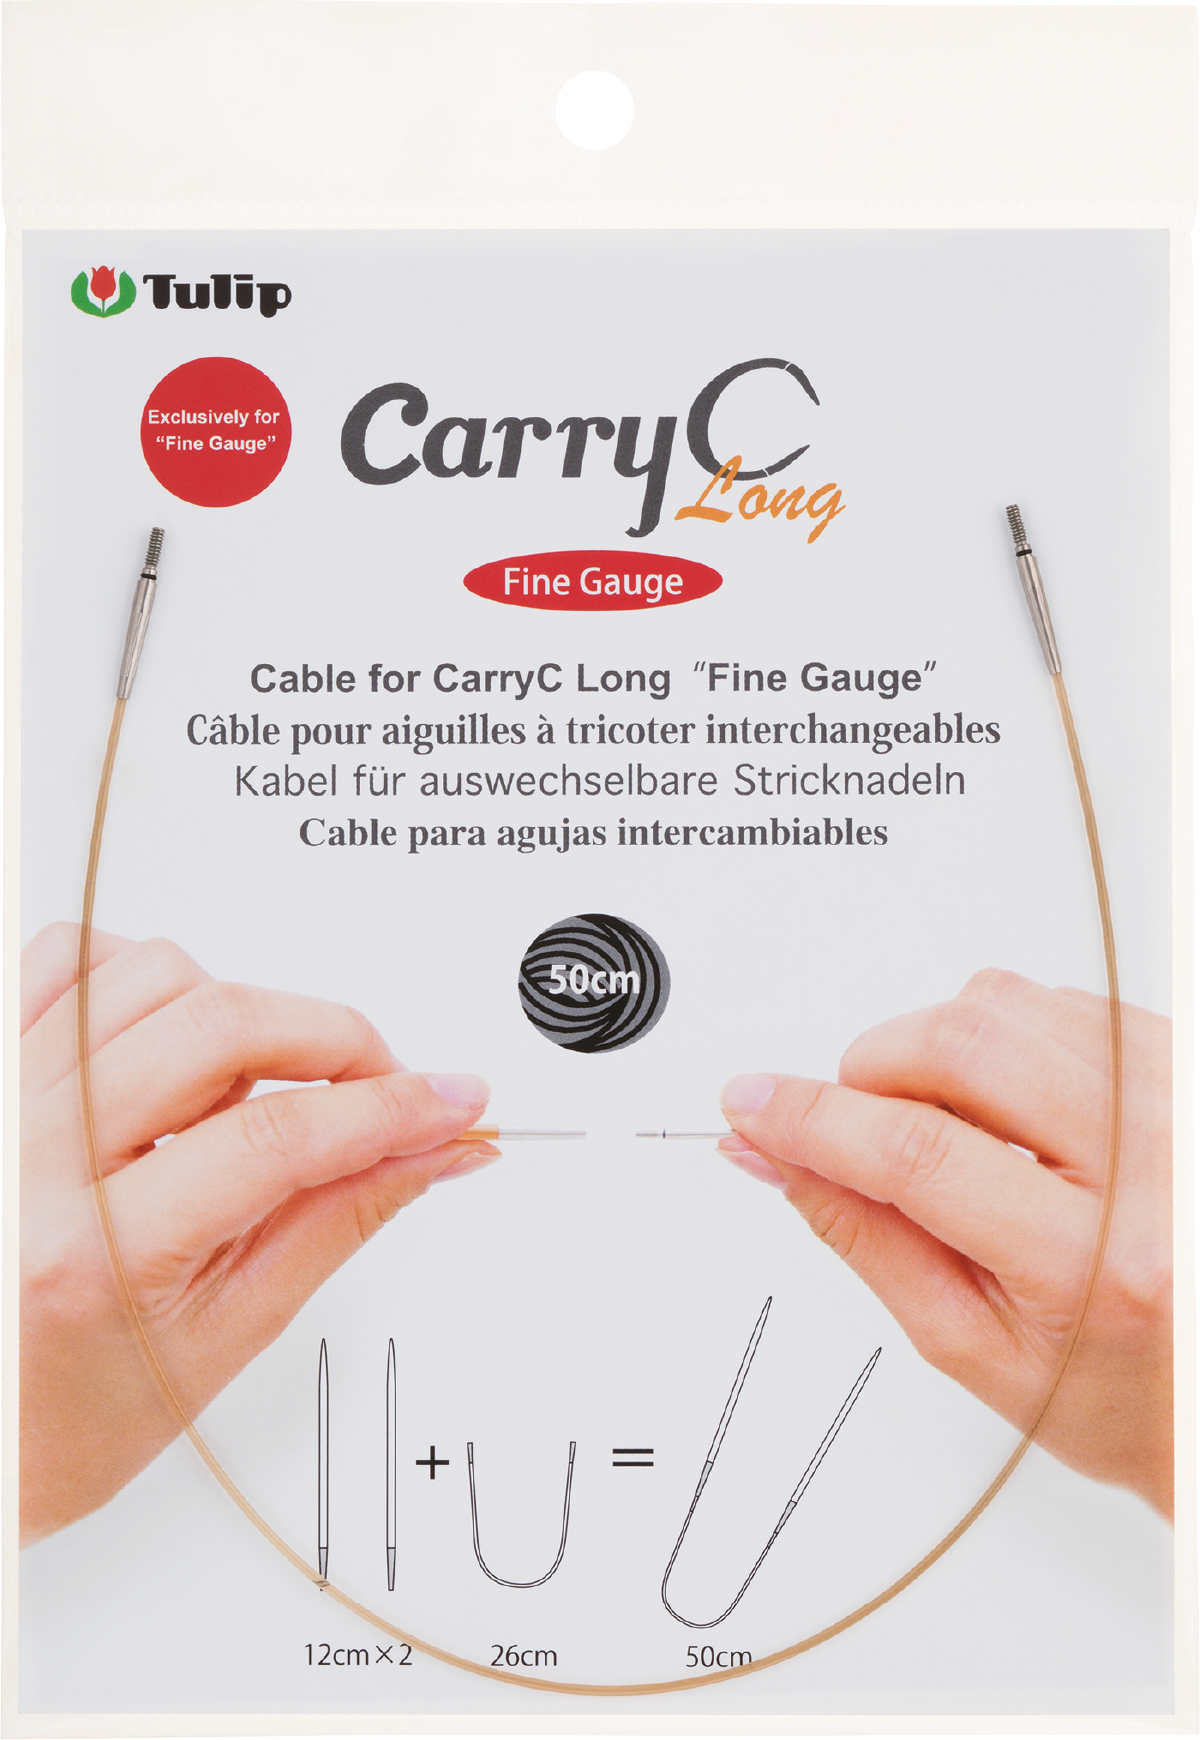 tulip kabel for carryC Lang "fin gauge"